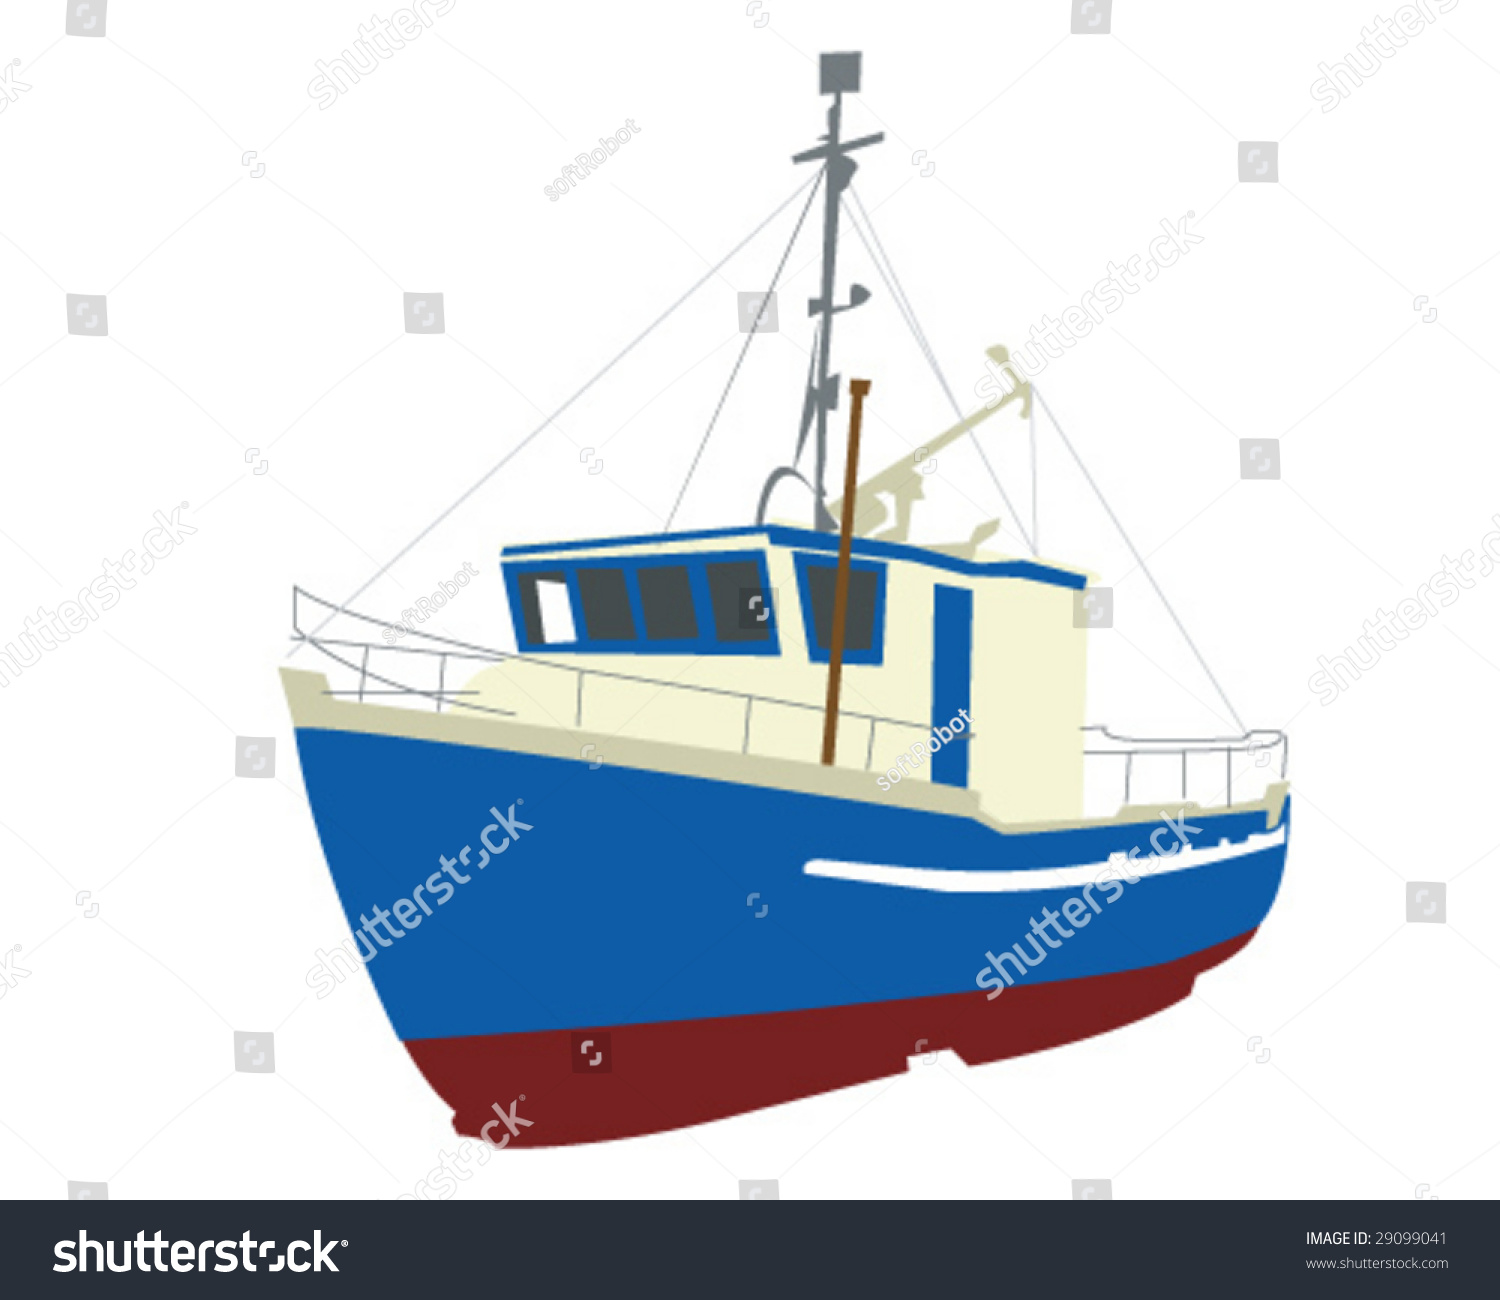 boat illustrations clipart - photo #19